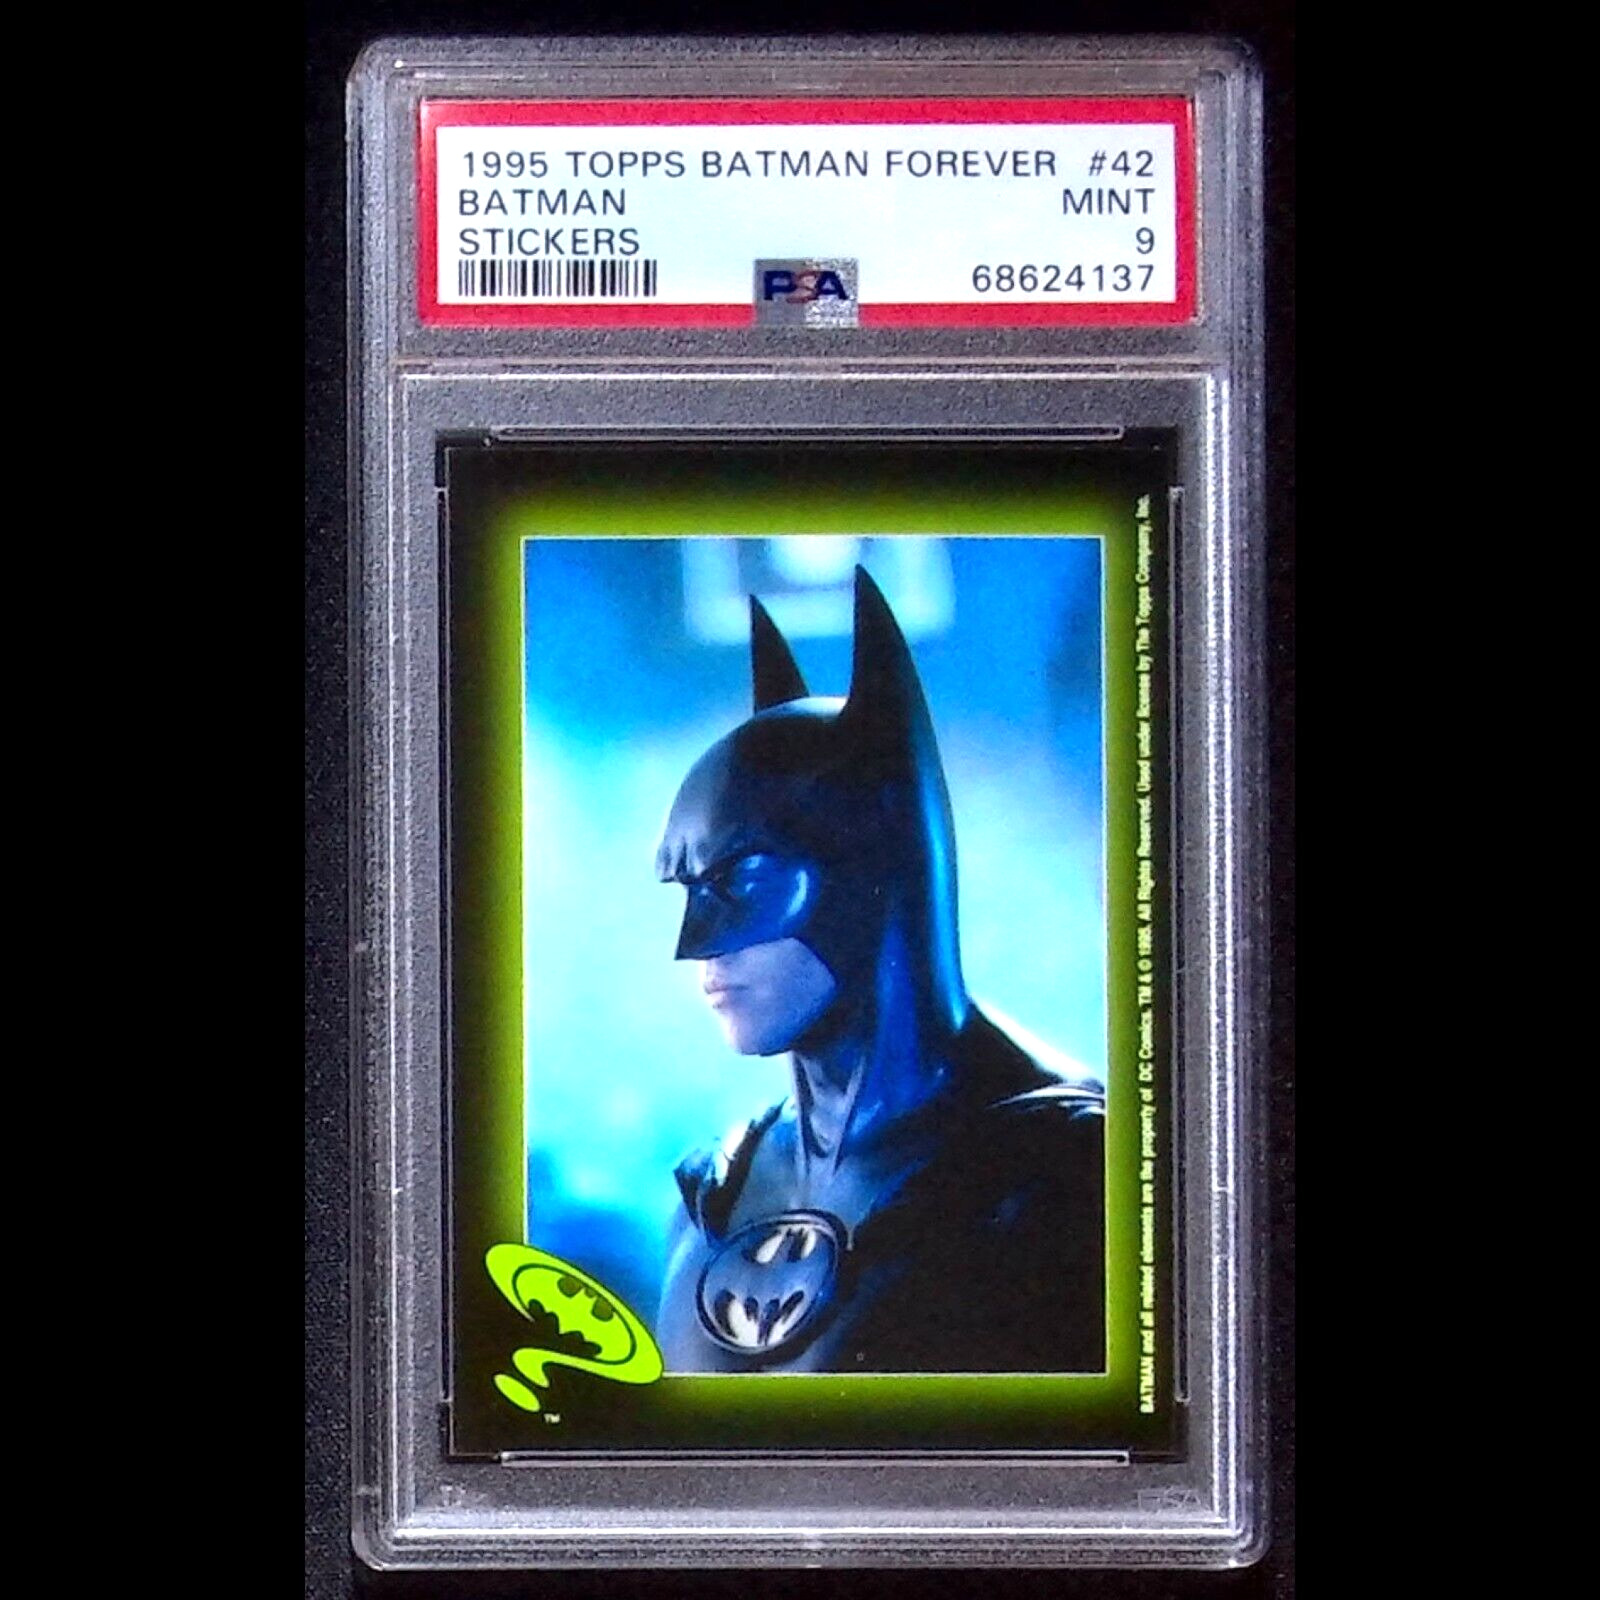 1995 Topps Batman Forever #42 - Batman - Stickers - PSA 9